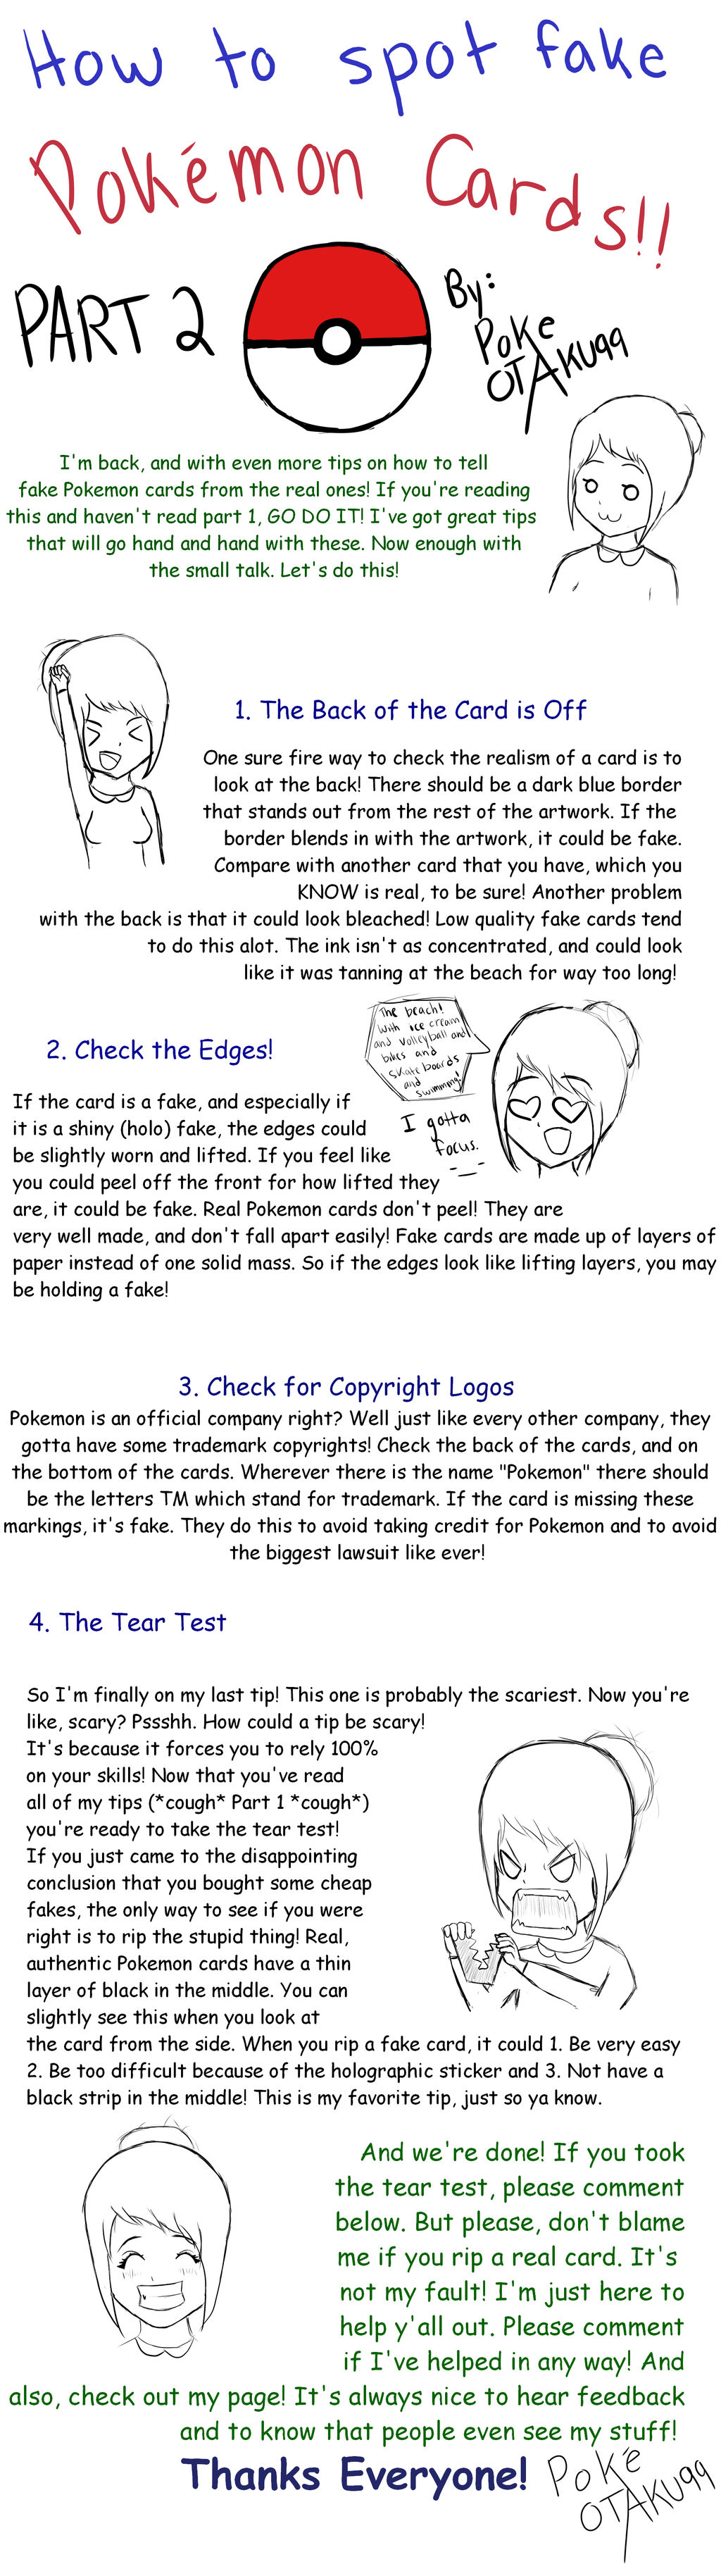 How to Spot Fake Pokemon Cards! Part 2 by SweetPasuteru on DeviantArt